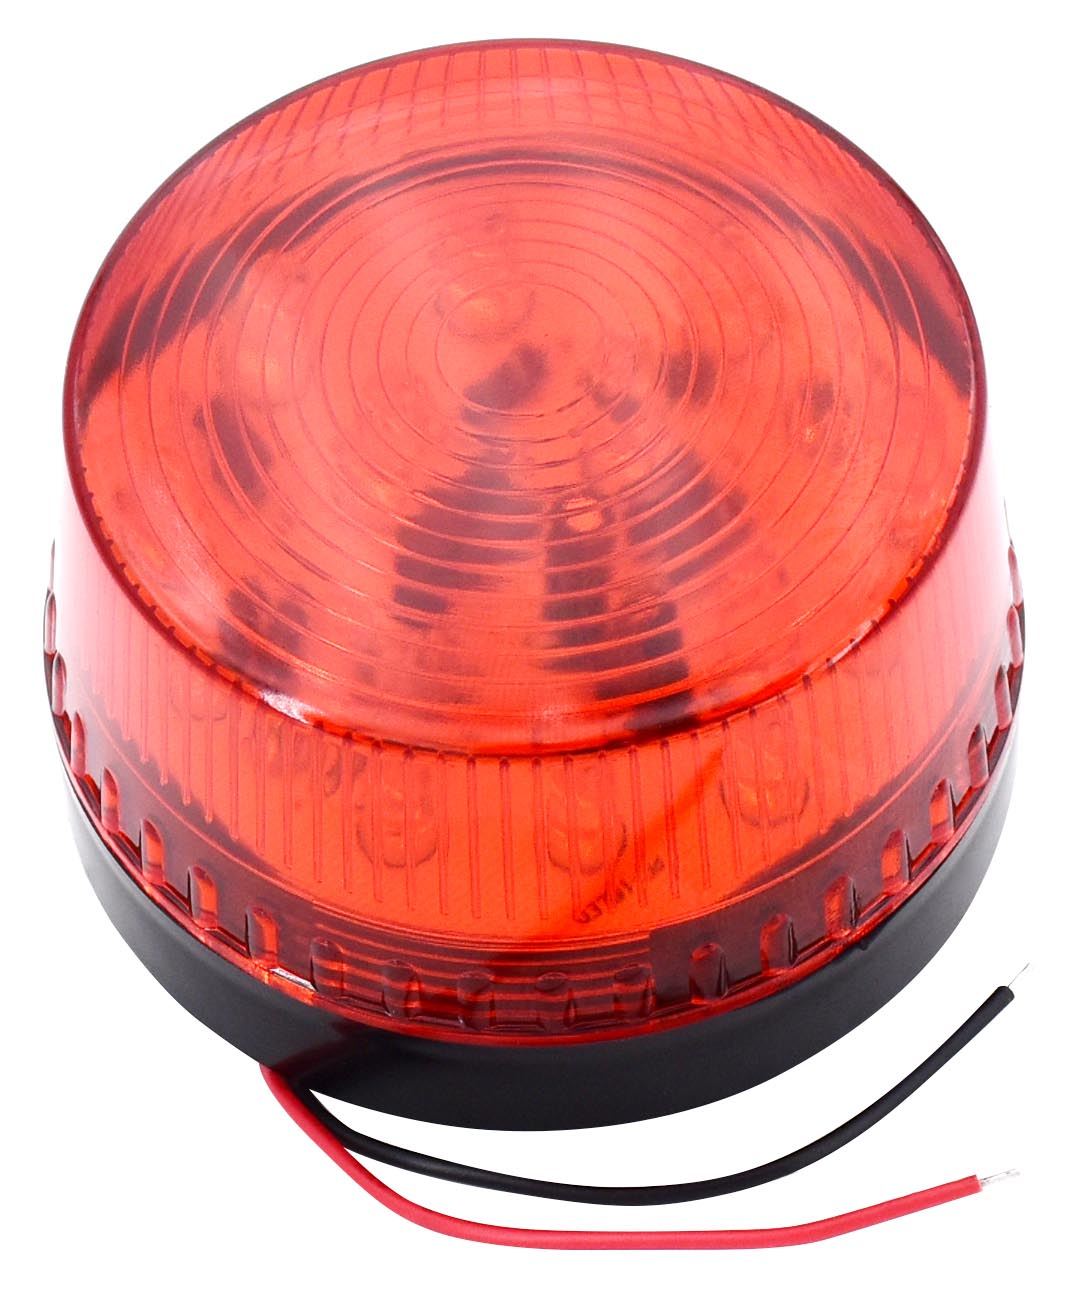 LED Signalleuchte Rot  Blitzfrequenz 100/Minute